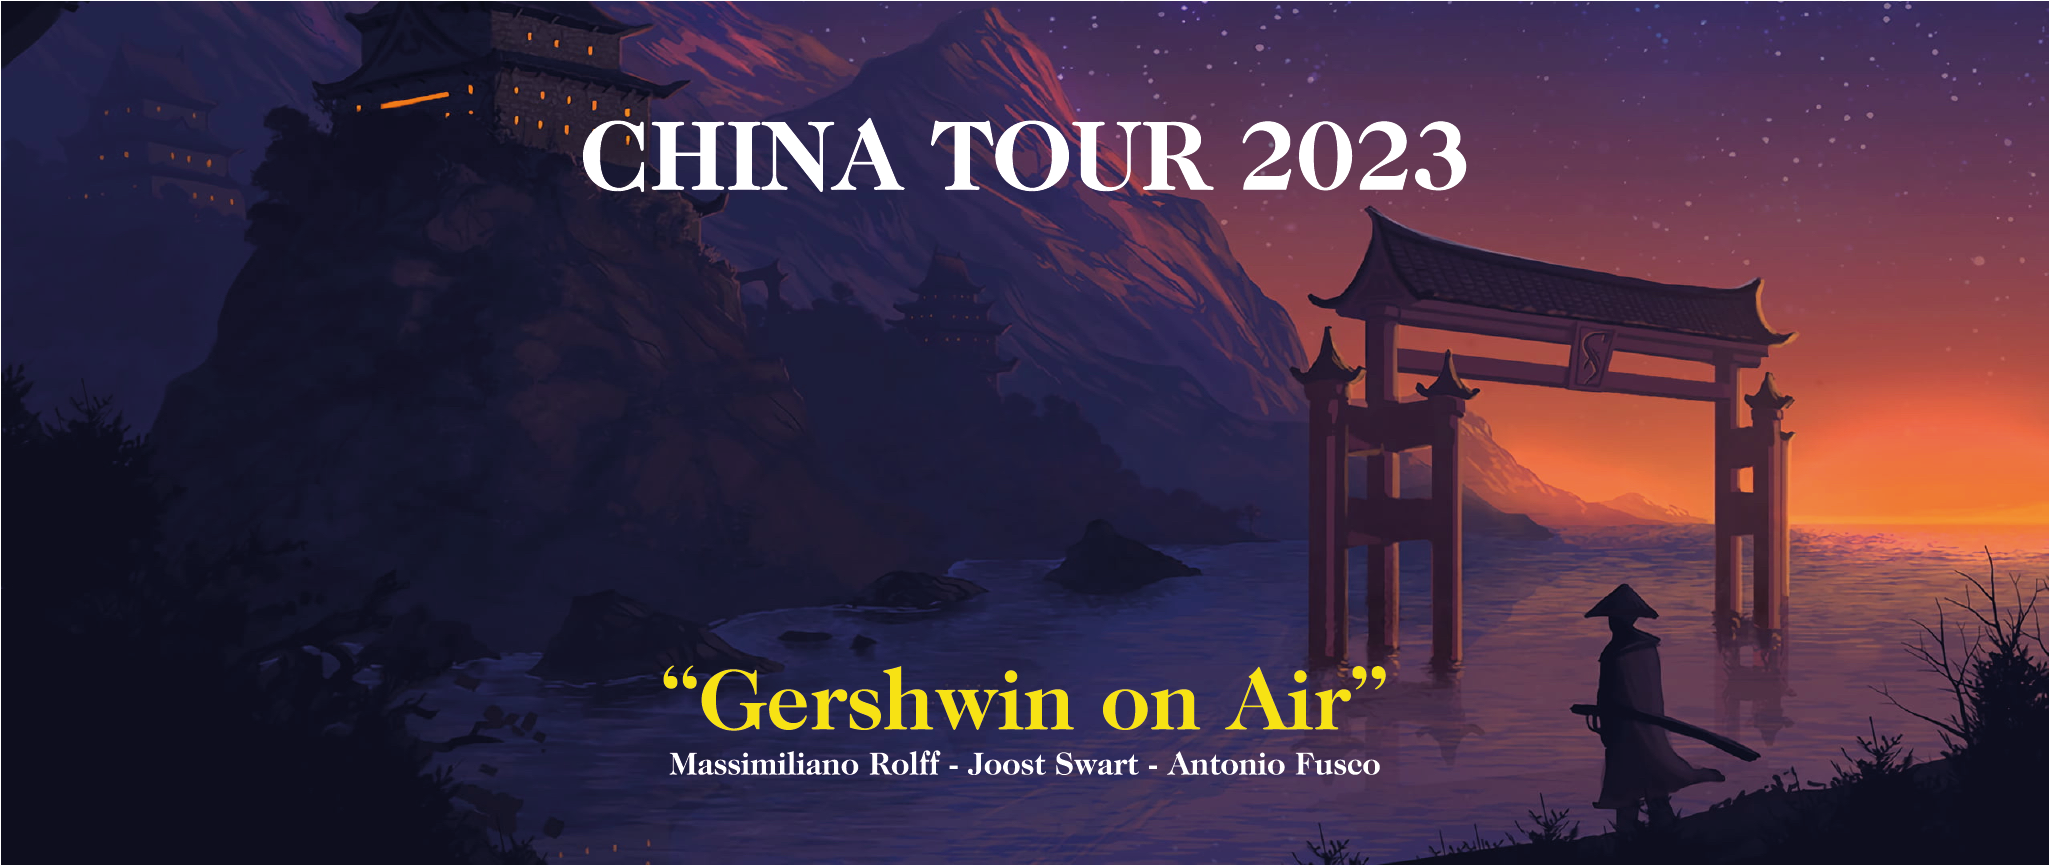 tour china 2023